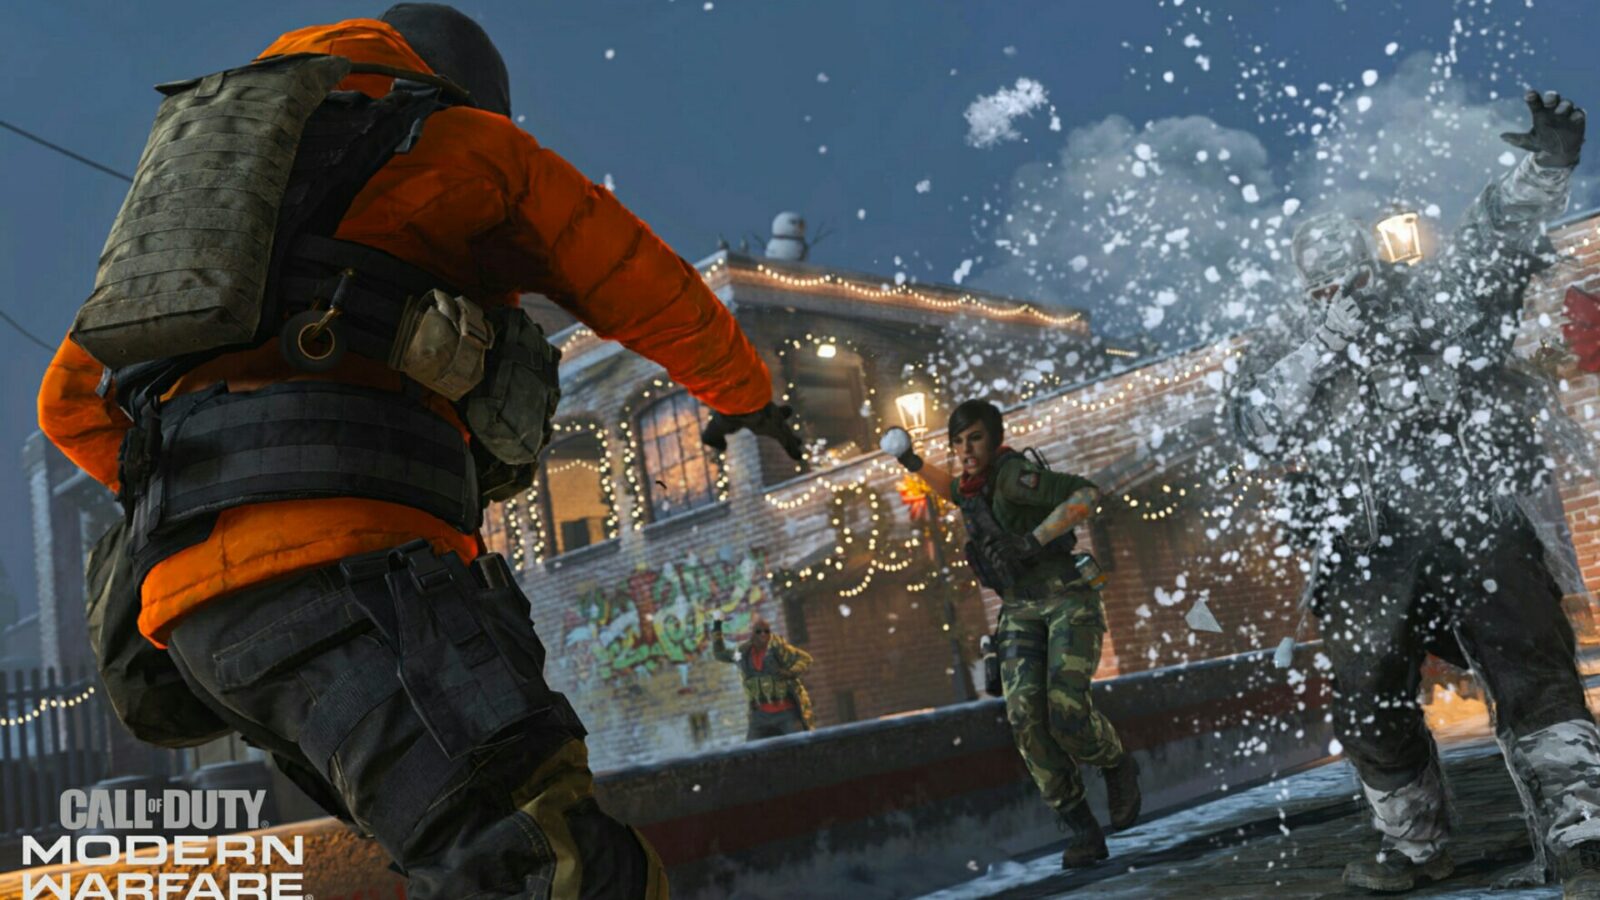 Call of Duty Modern Warfare Sambut Liburan Dengan Perang Bola Salju